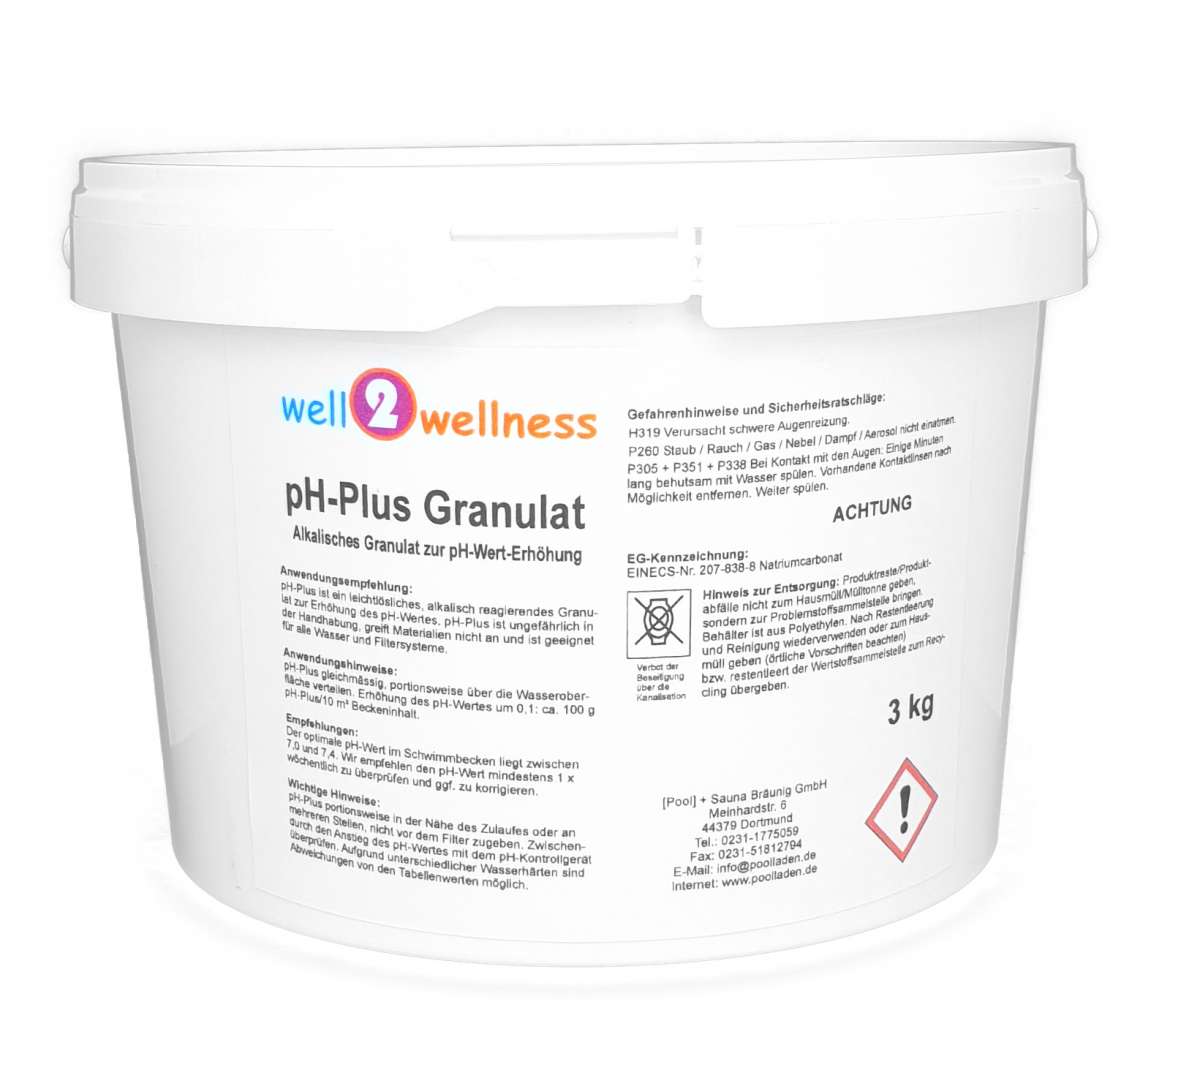 well2wellness® PH Plus Granulat